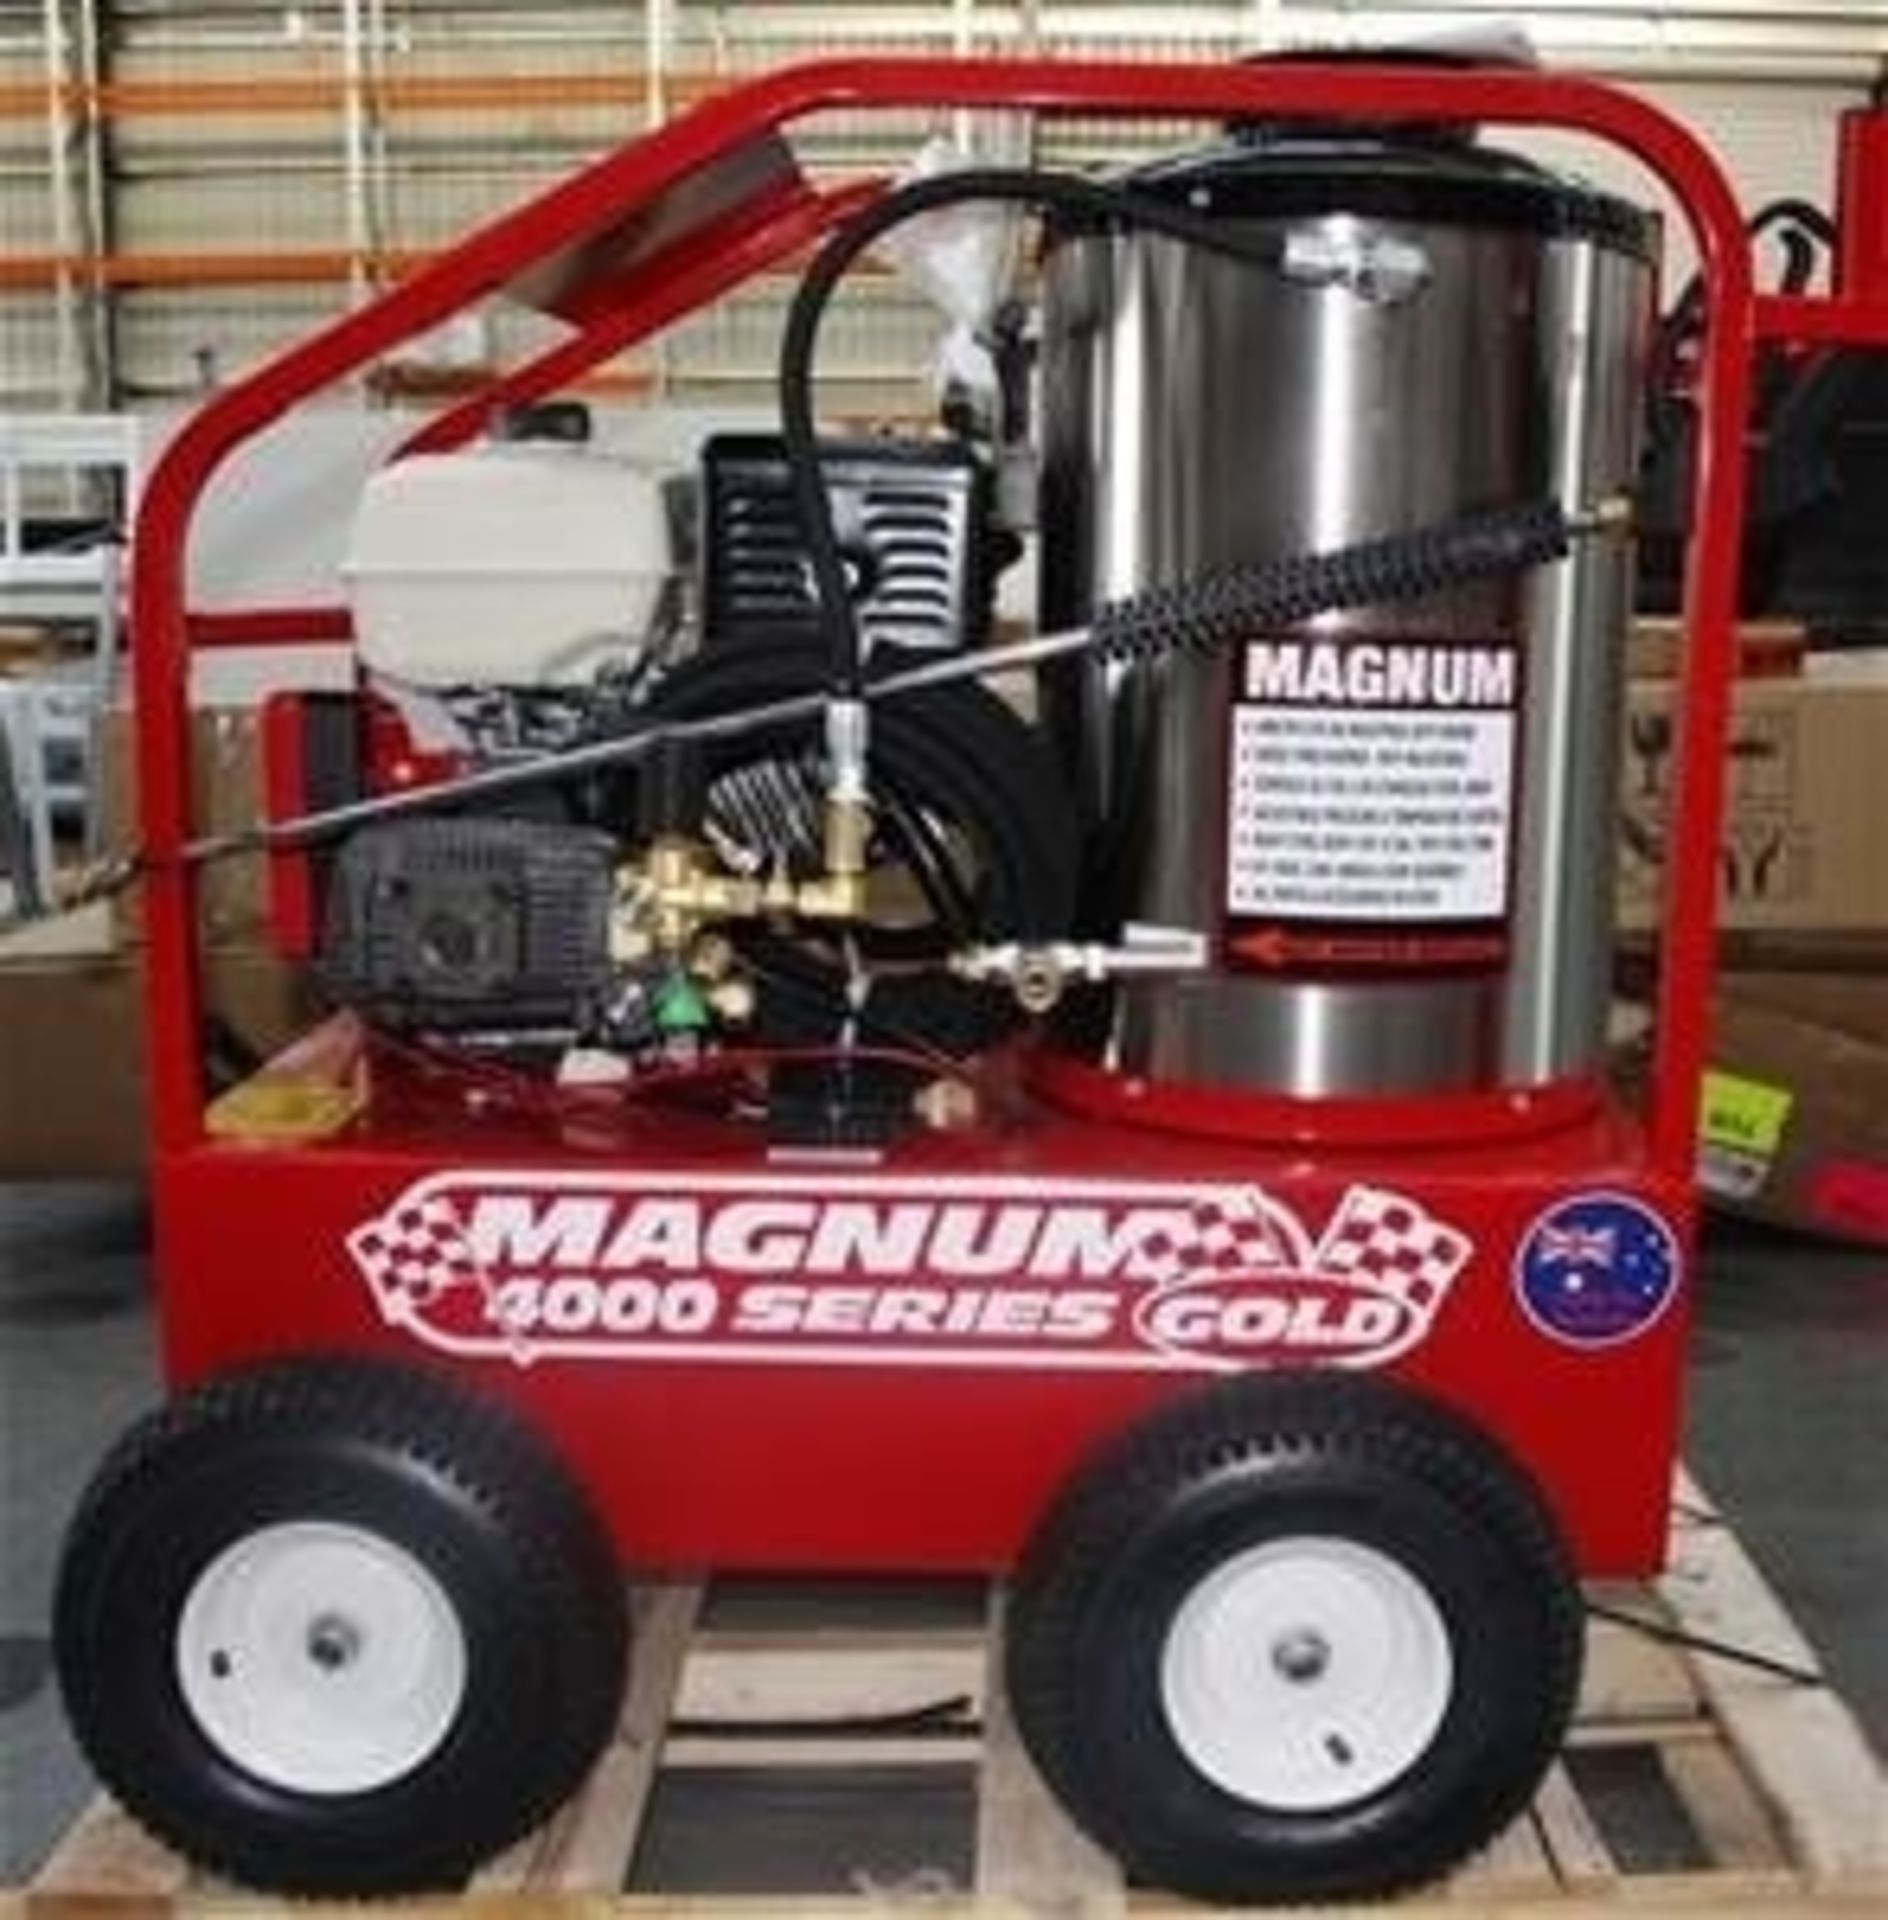 Easy Kleen Diesel Fired Hot Water Pressure Washer Magnum 4000 Series Gold 15 hp elec start eng, 30FT